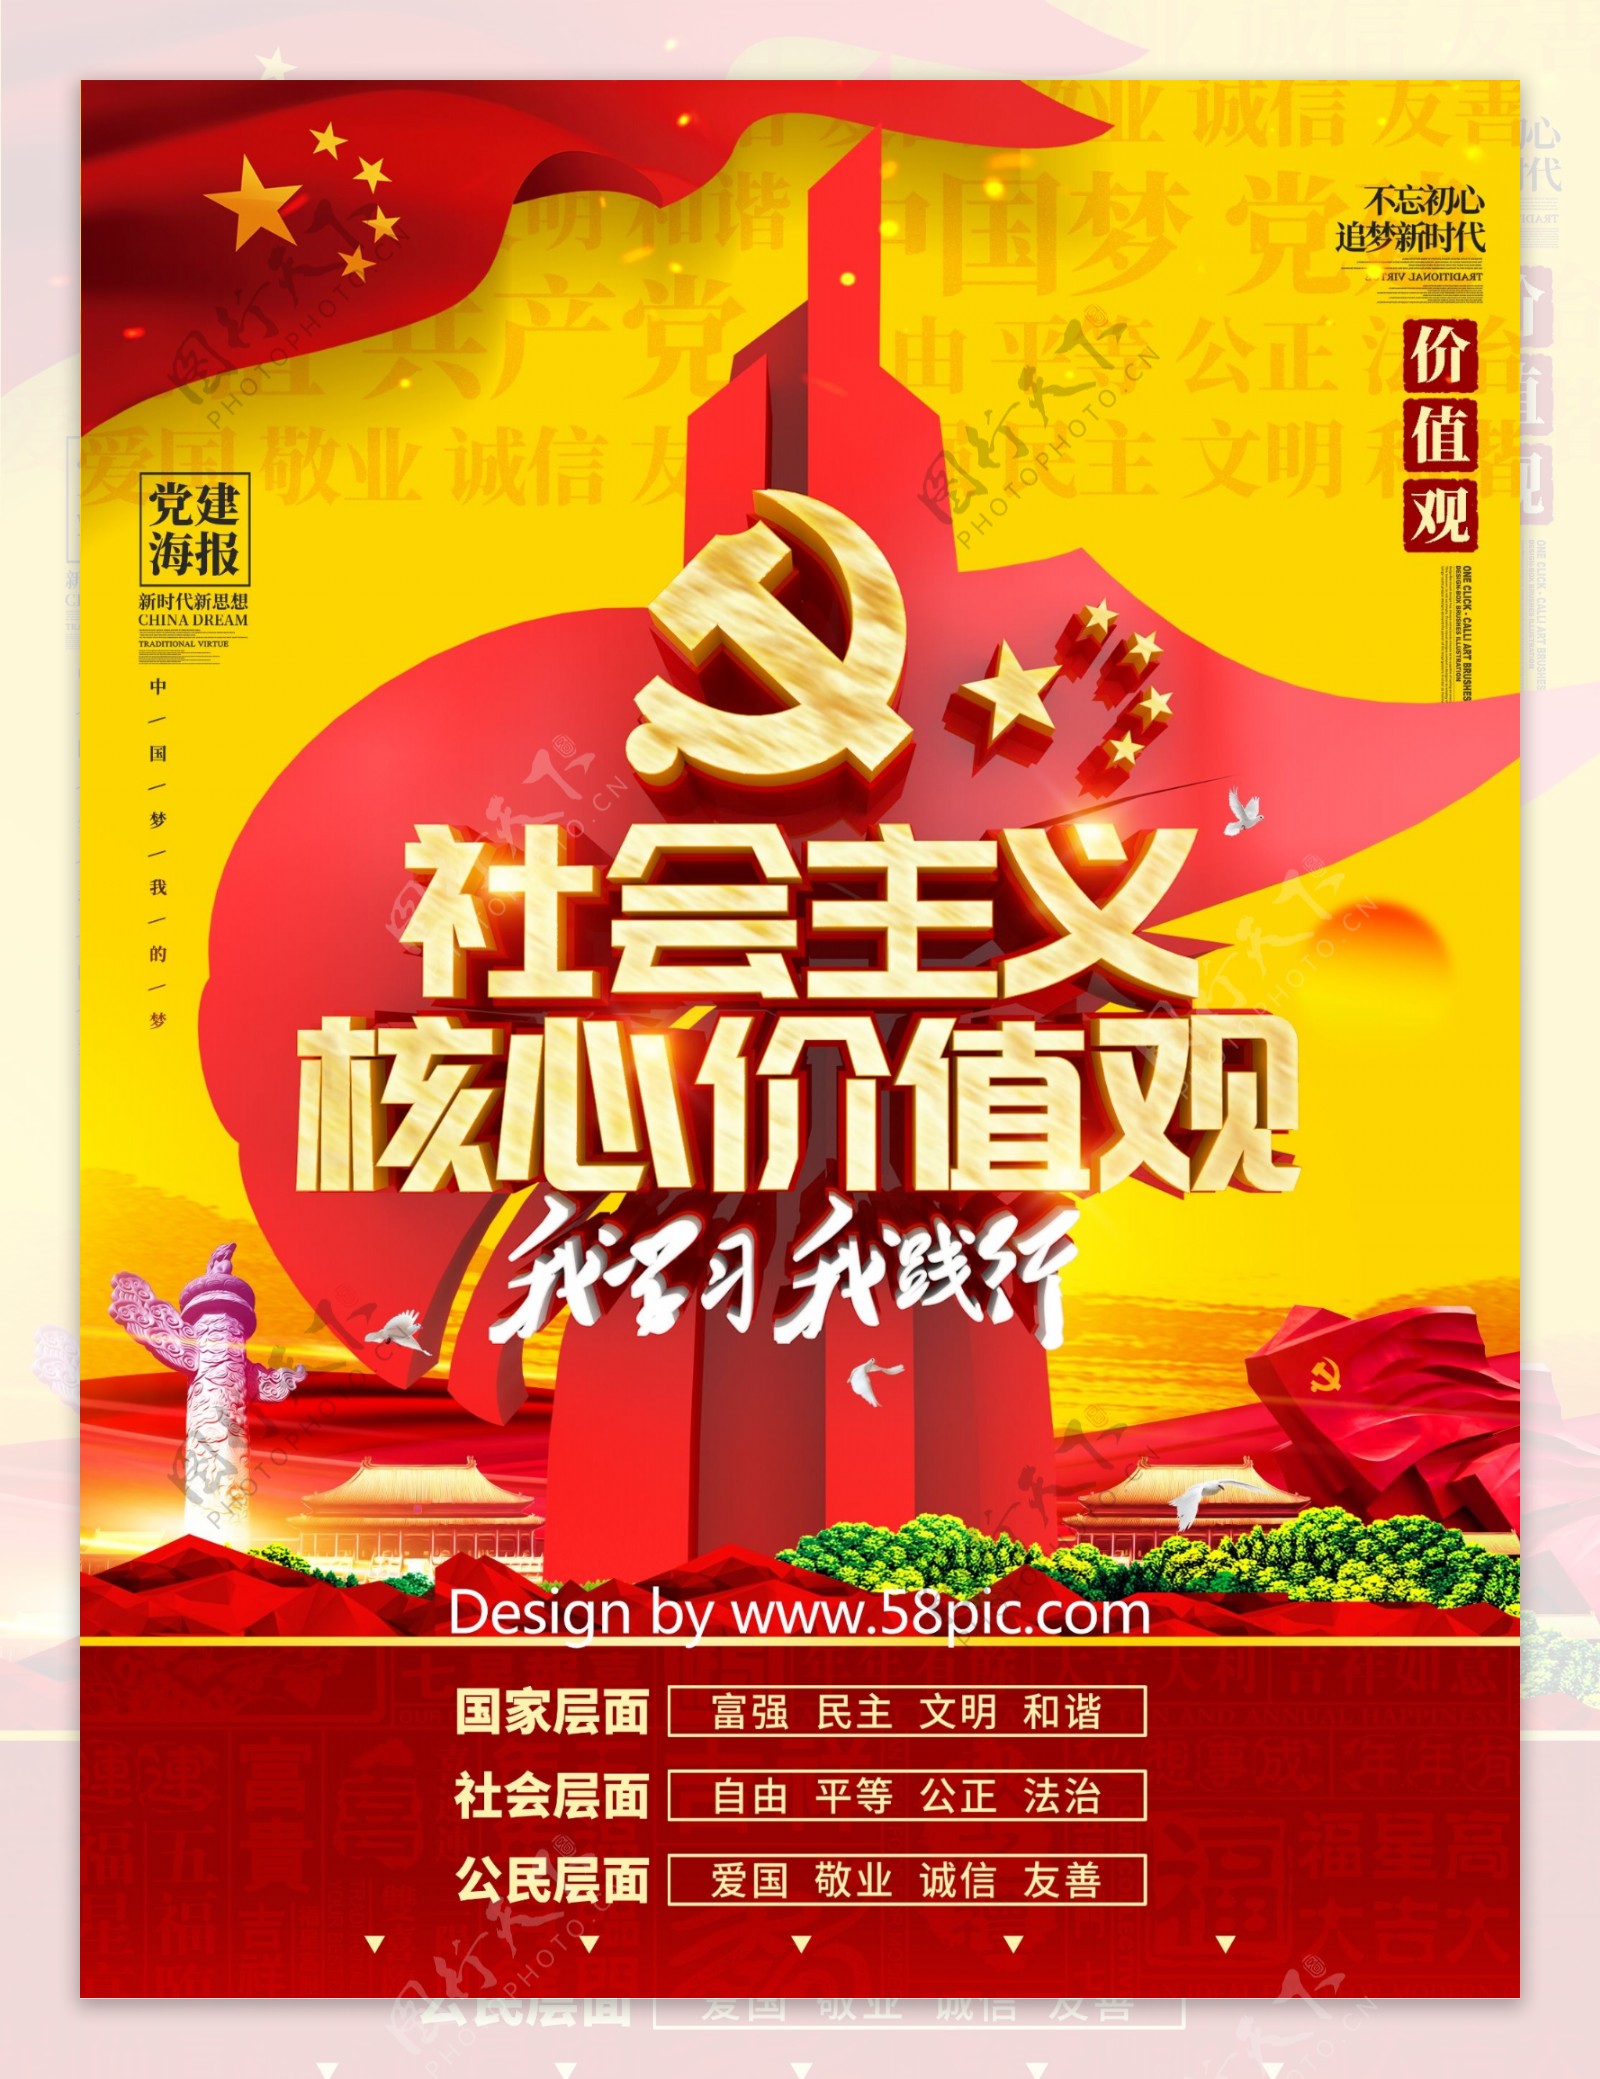 C4D创意党建雕塑社会主义核心价值观海报